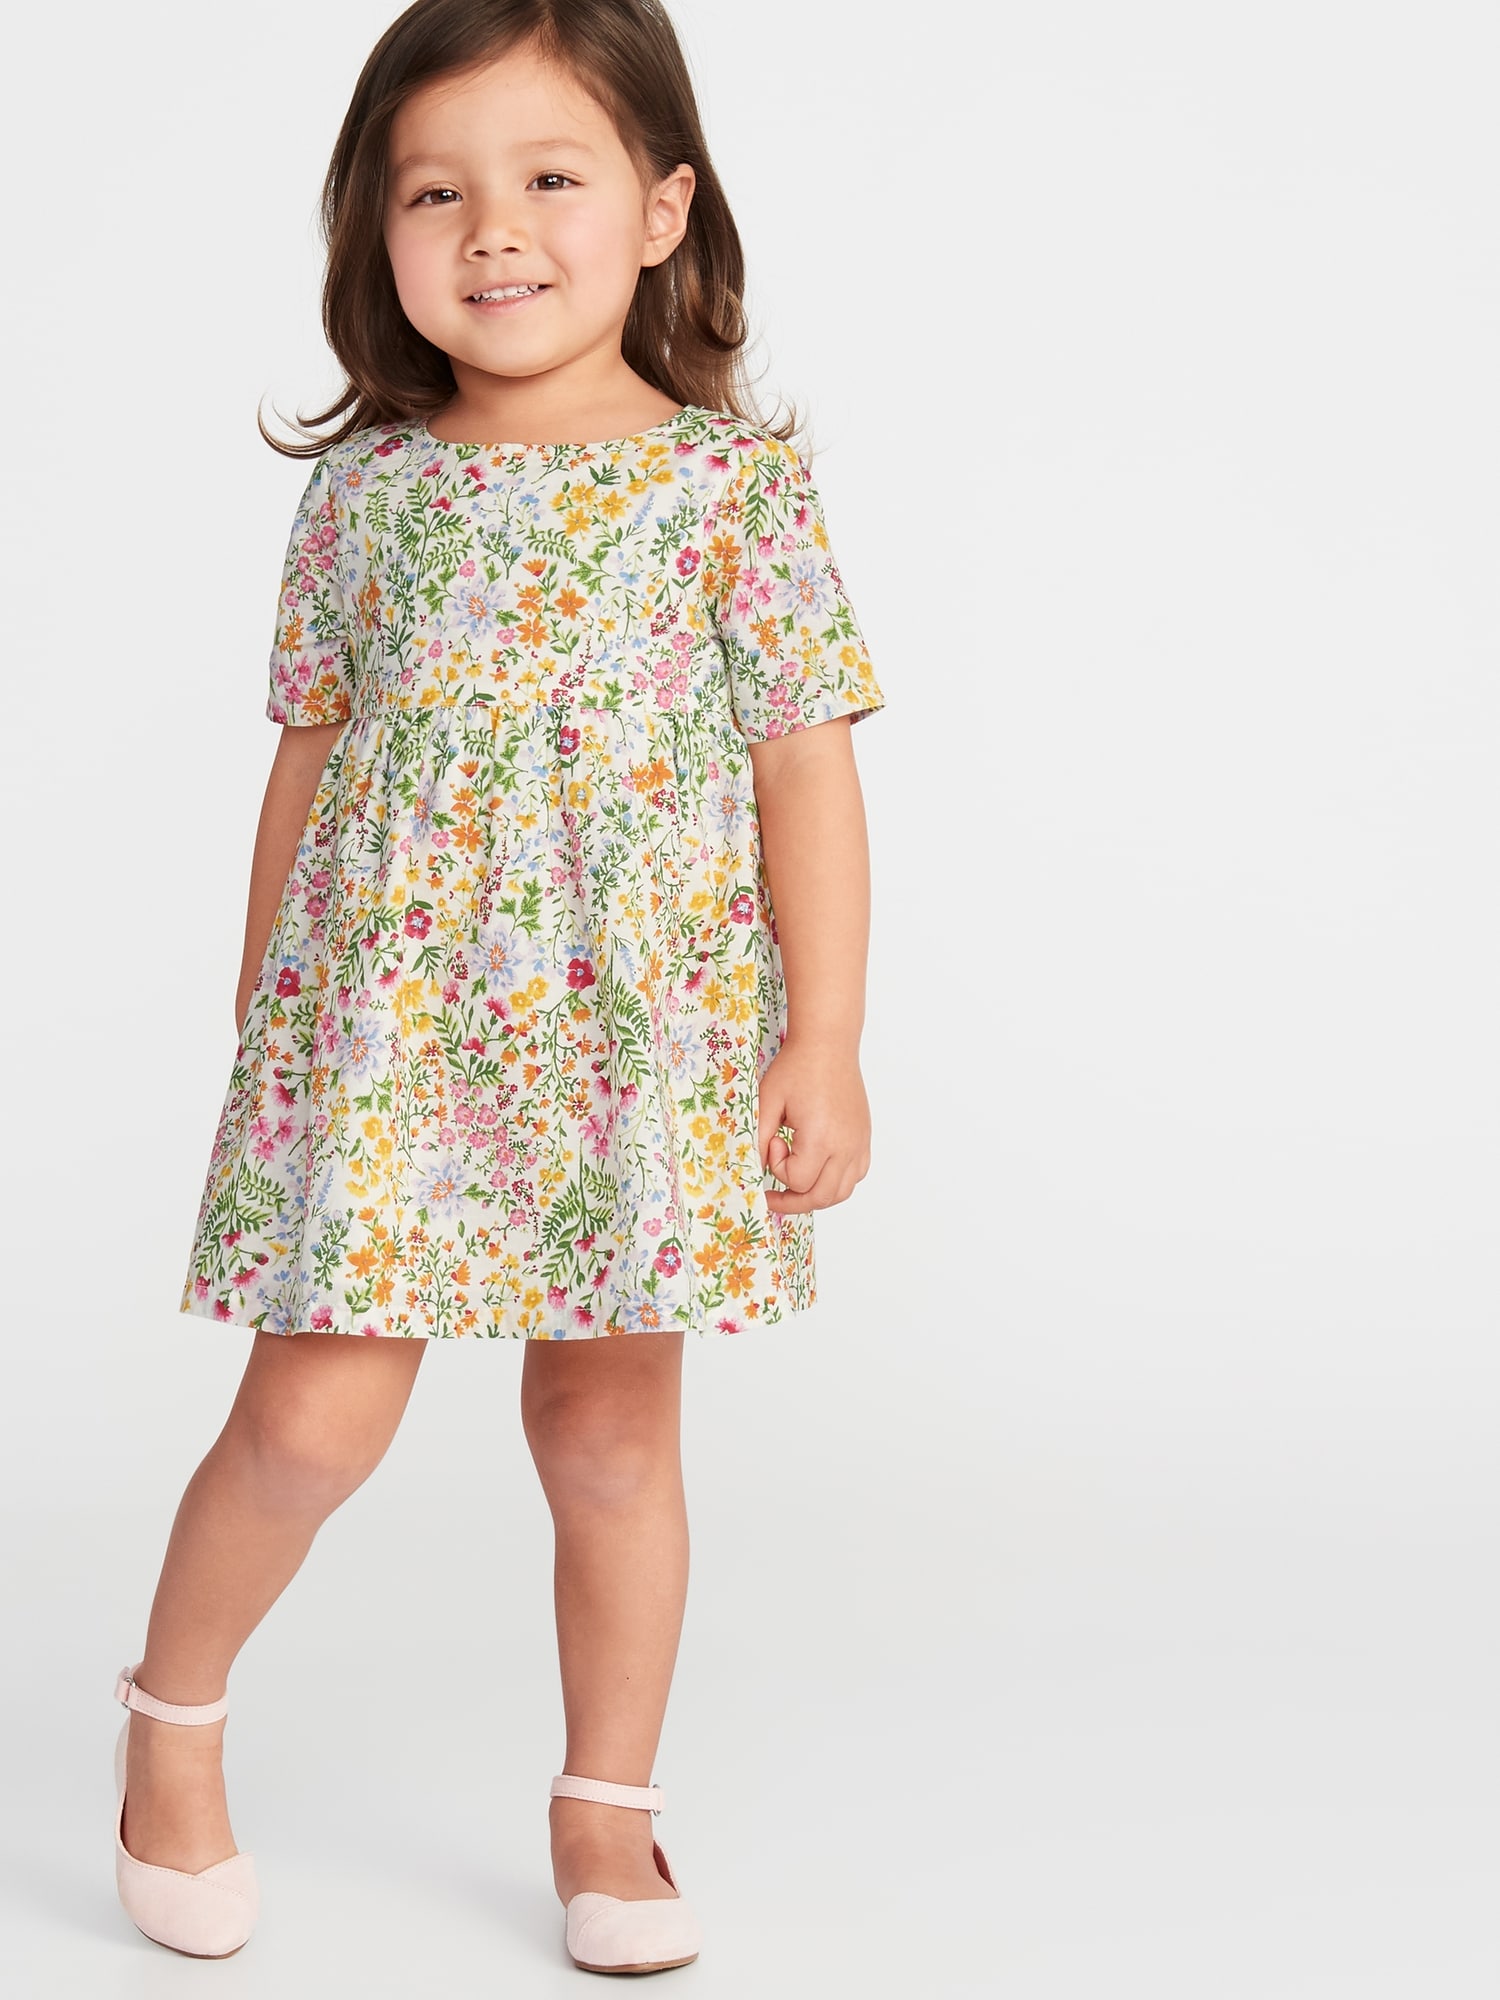 Fit & Flare Floral Dress for Toddler Girls | Old Navy